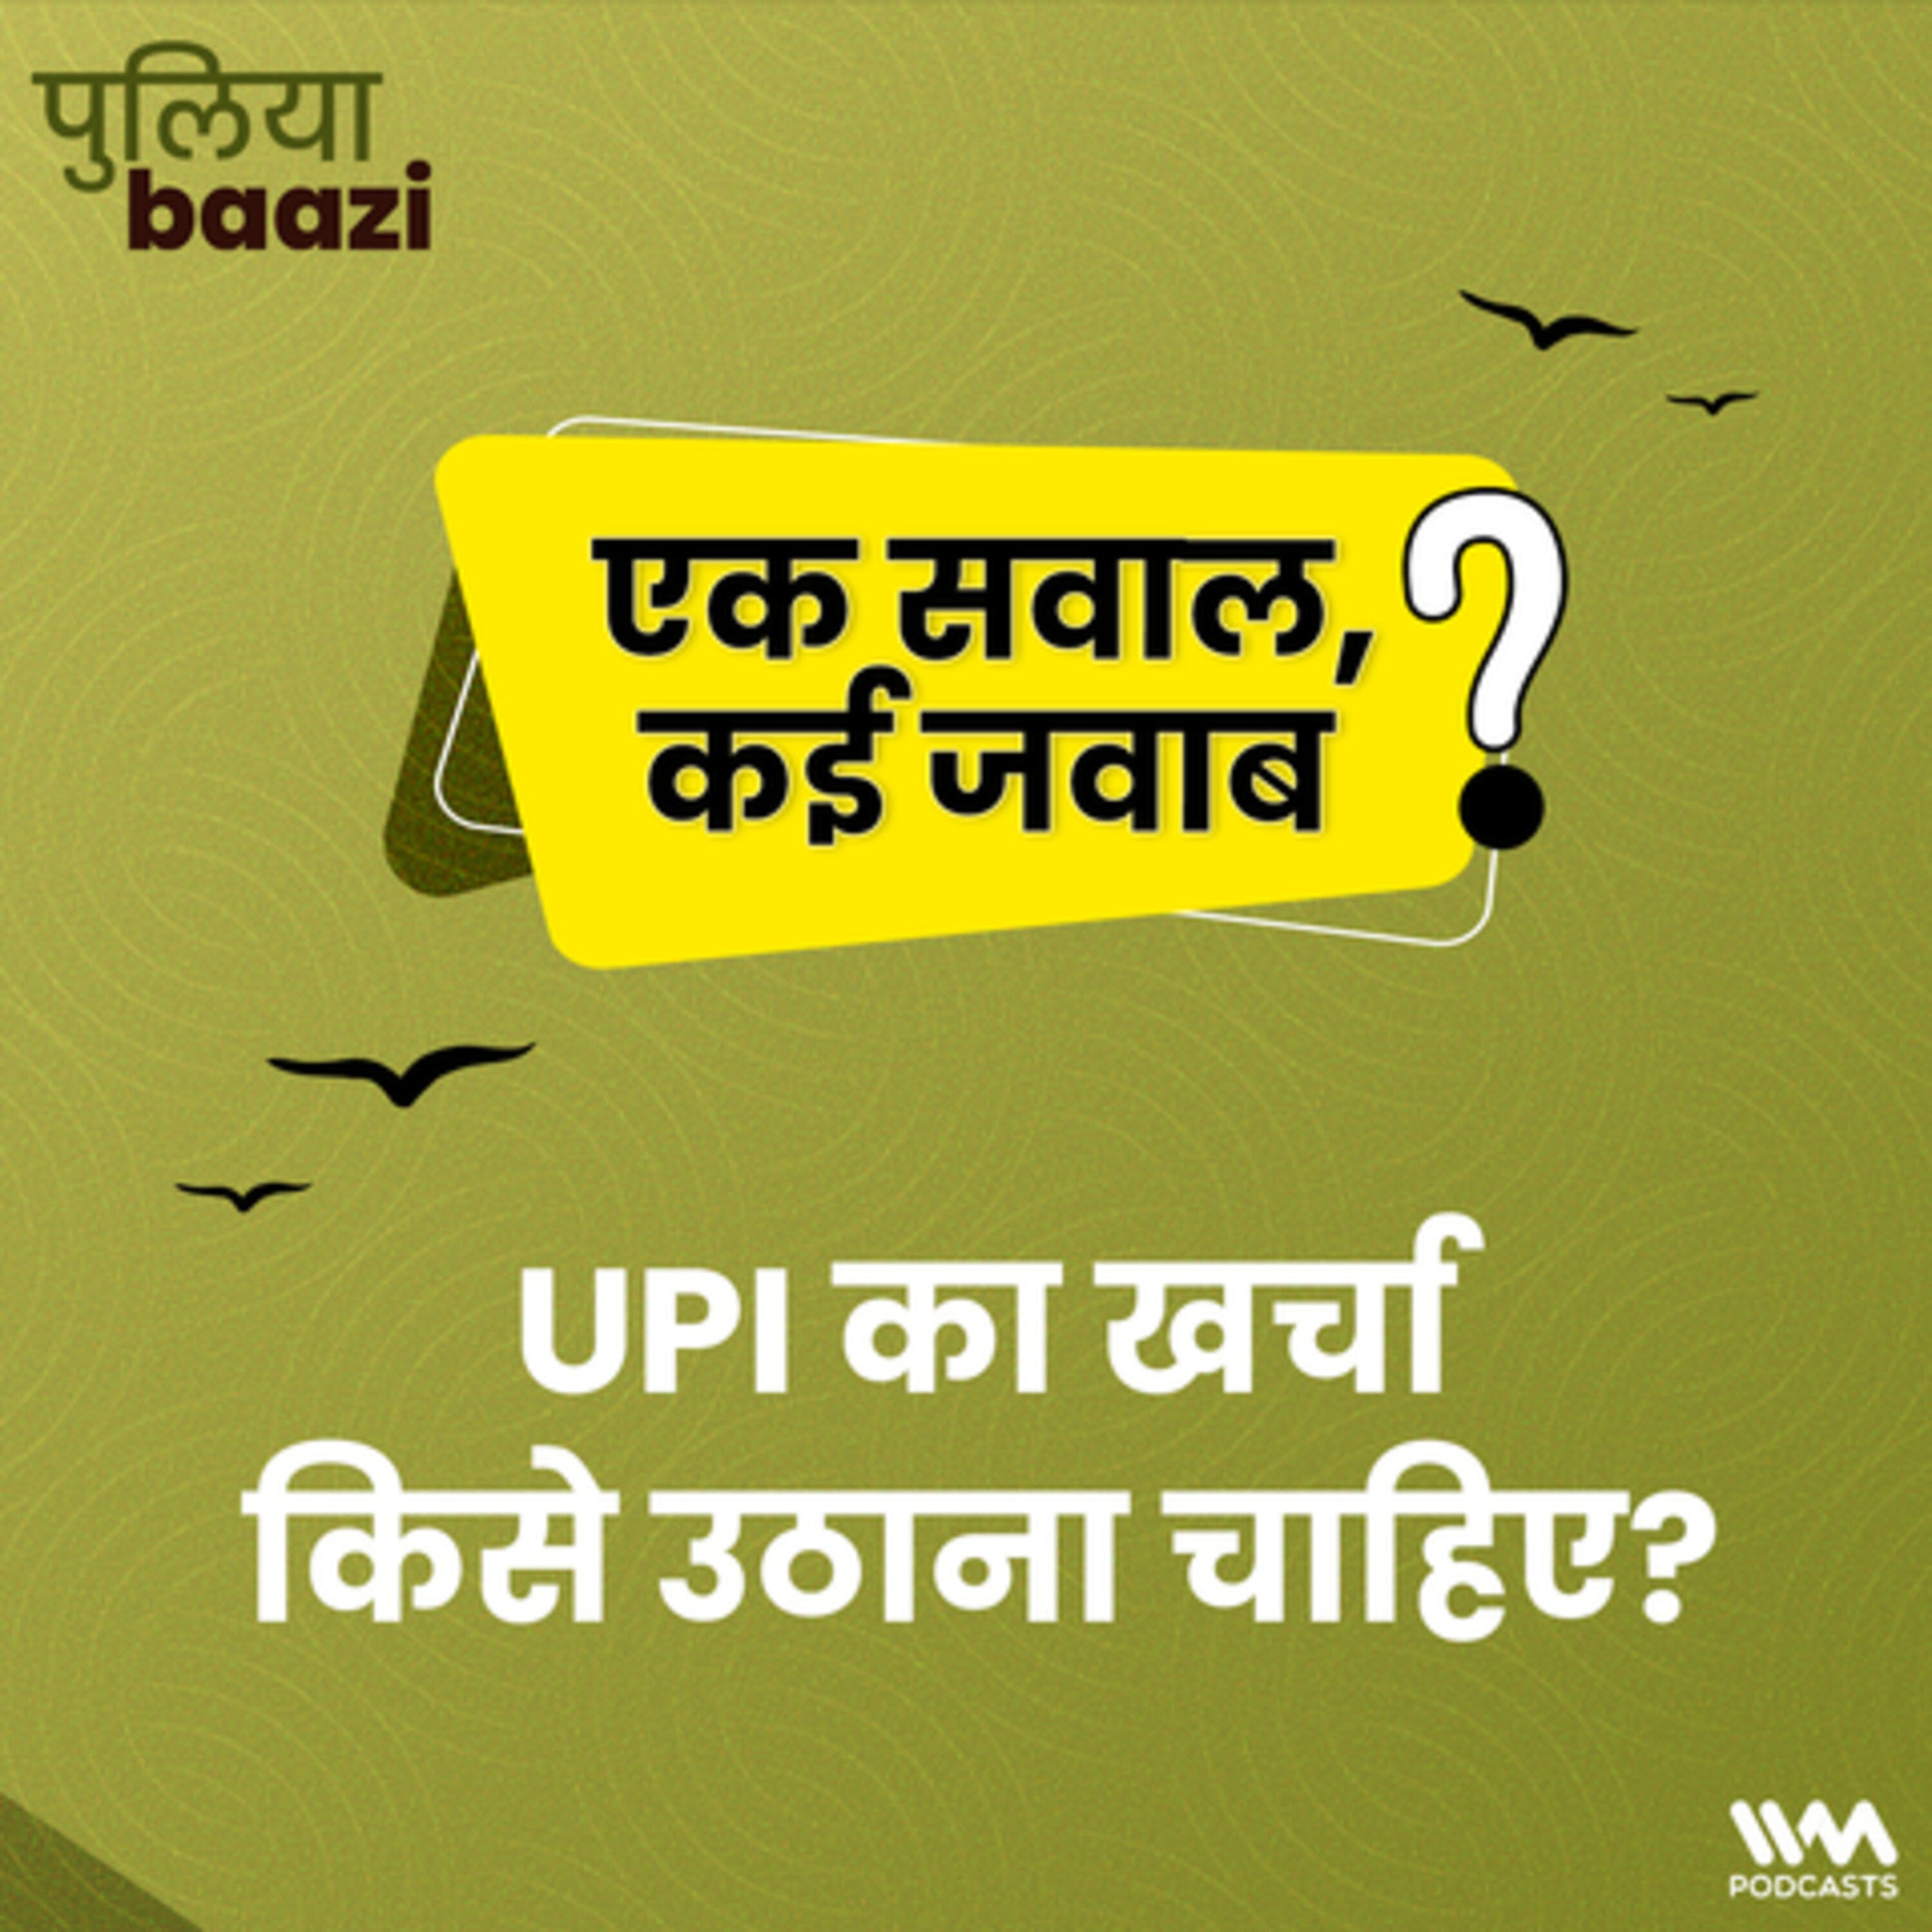 UPI का खर्चा किसे उठाना चाहिए? Who should pay for UPI?